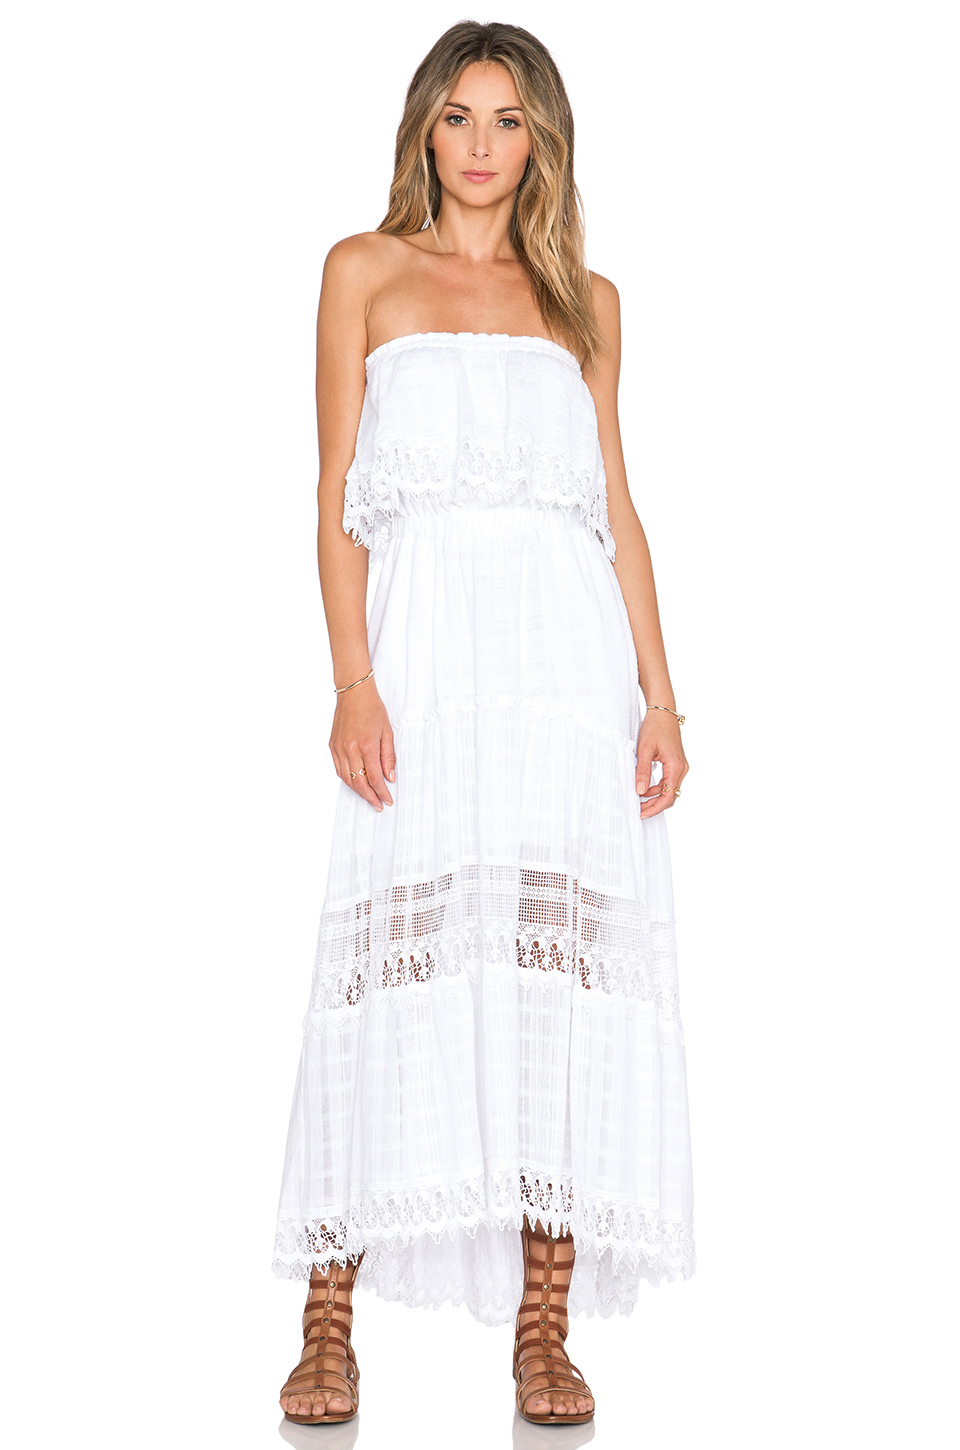 Lyst - Gypsy 05 Strapless Maxi Dress in White